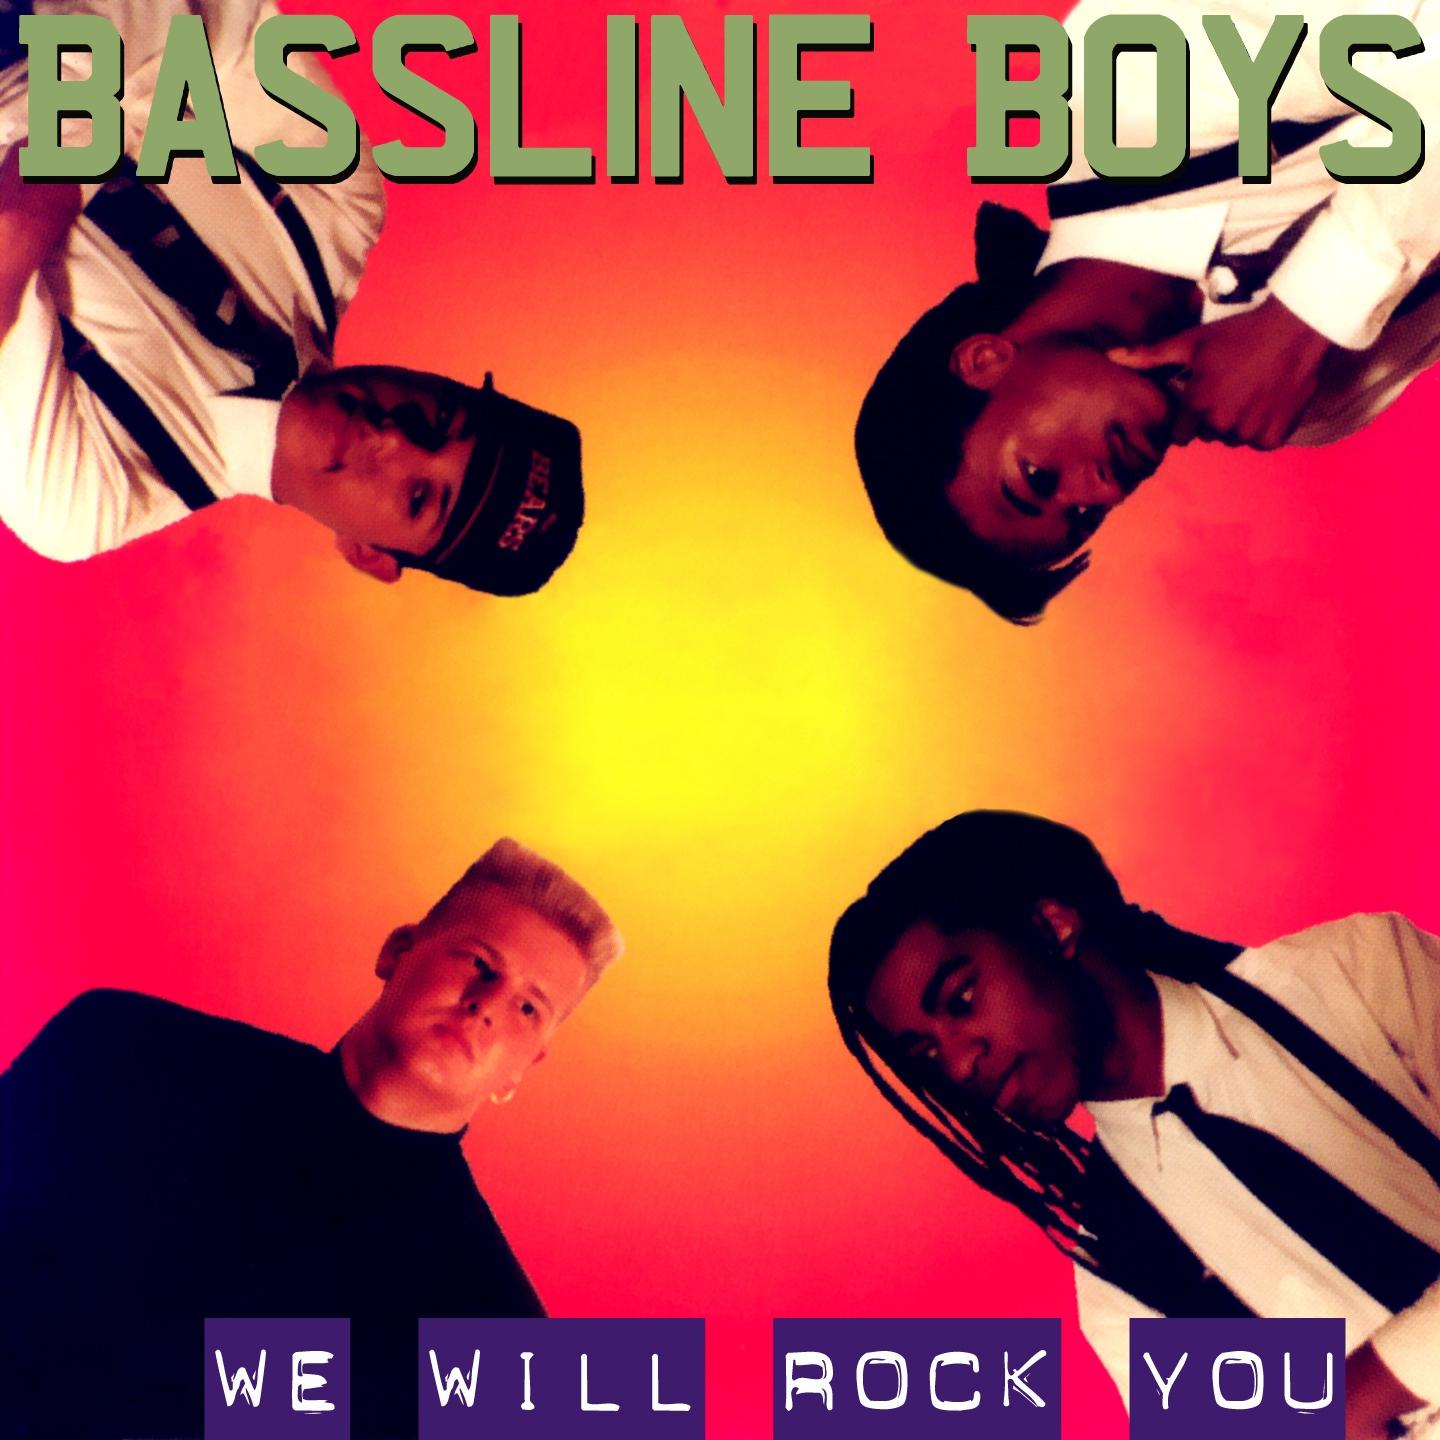 Bassline Boys - Just for Fun